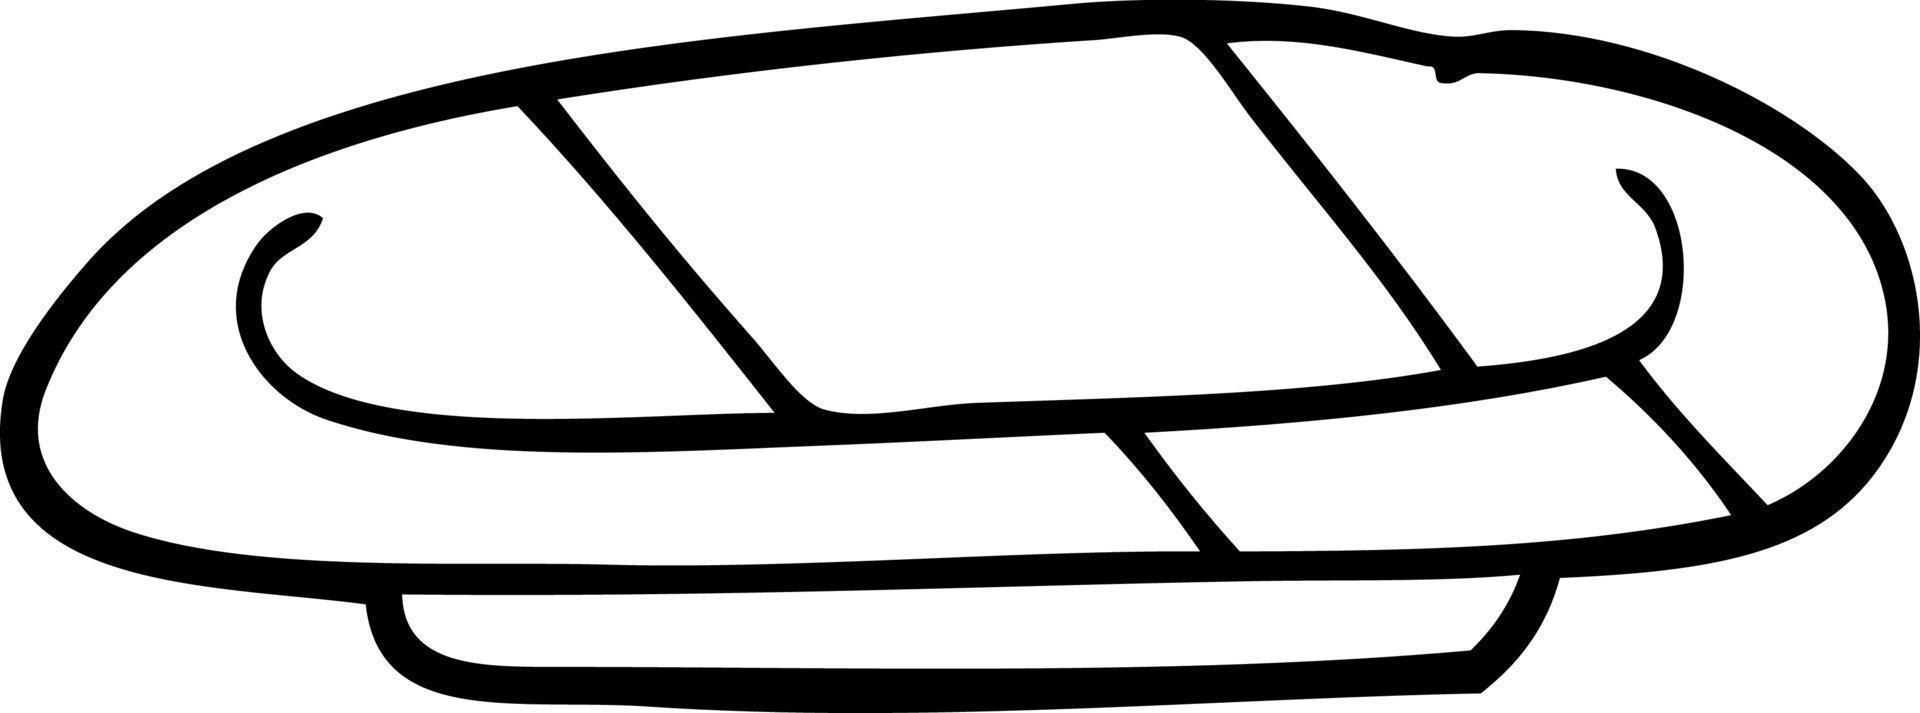 line drawing cartoon plate vector